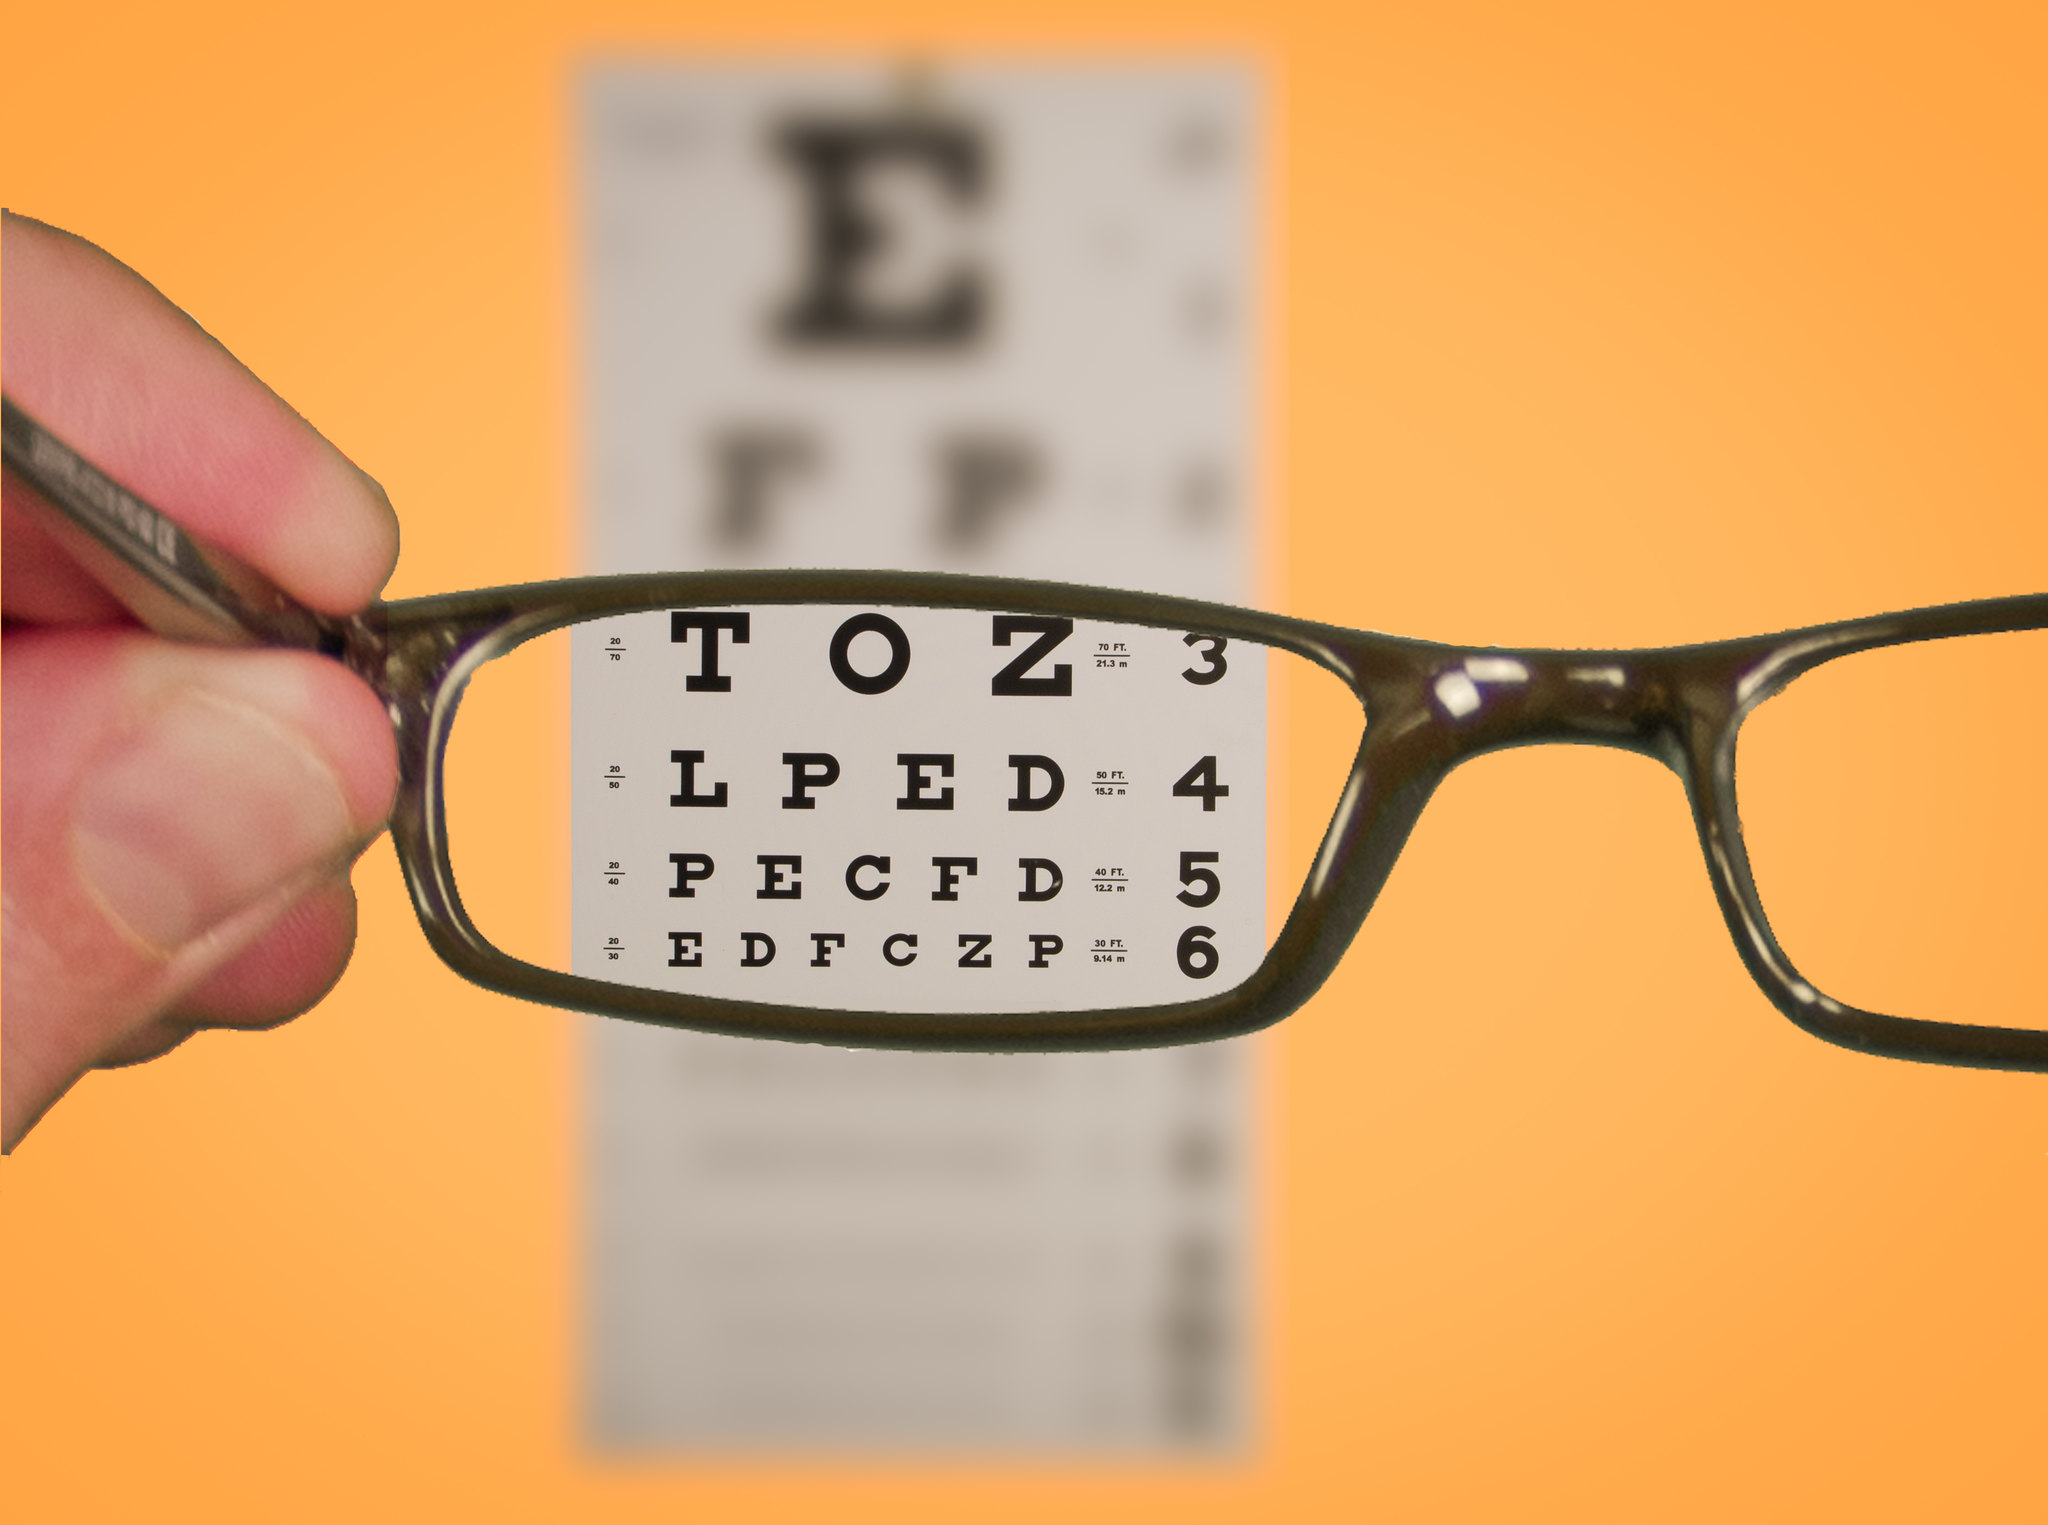 Showing visual rhetoric through an eye glass looking at a vision chart.